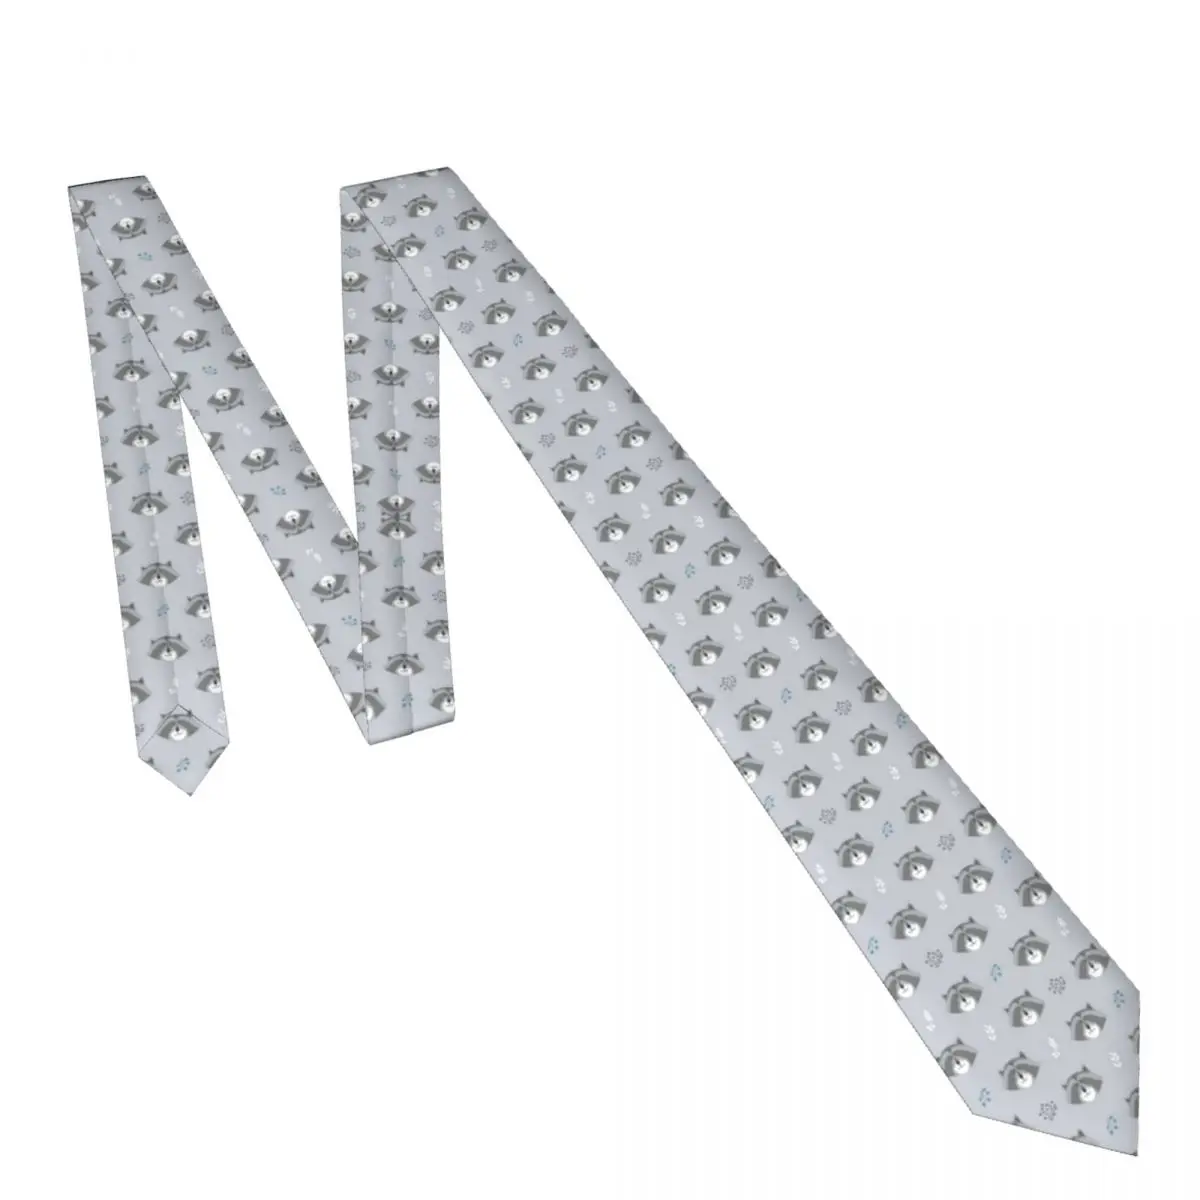 Corbata clásica de cabeza de mapache para hombre, corbatas ajustadas, cuello estrecho, corbata informal, accesorios para regalo